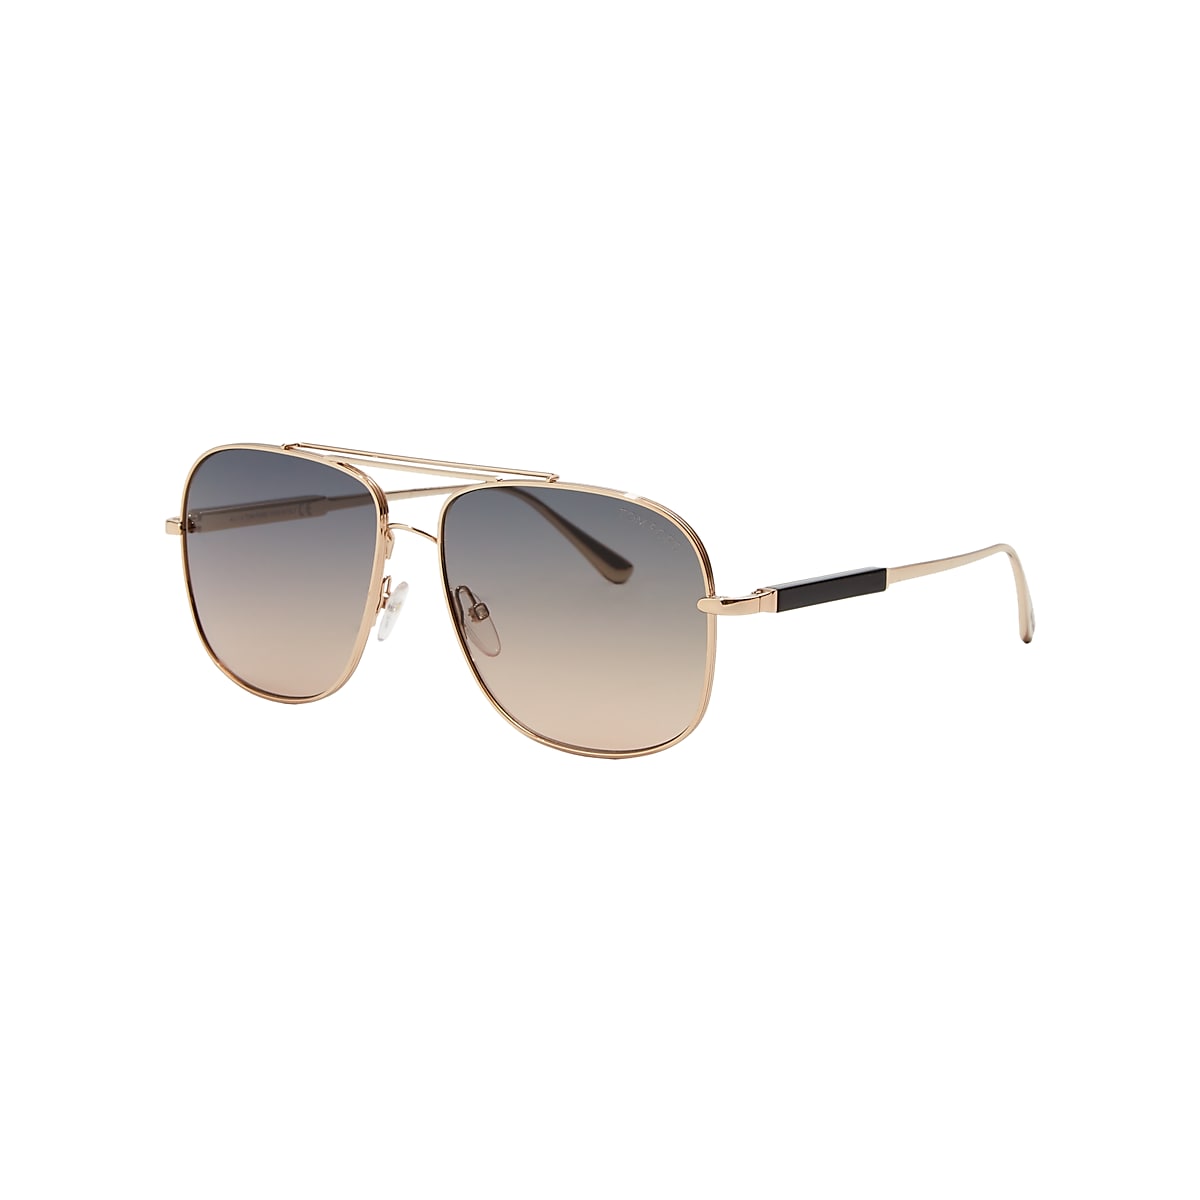 Tom Ford FT0669 60 Grey Gradient & Gold Pink Sunglasses Sunglass Hut USA